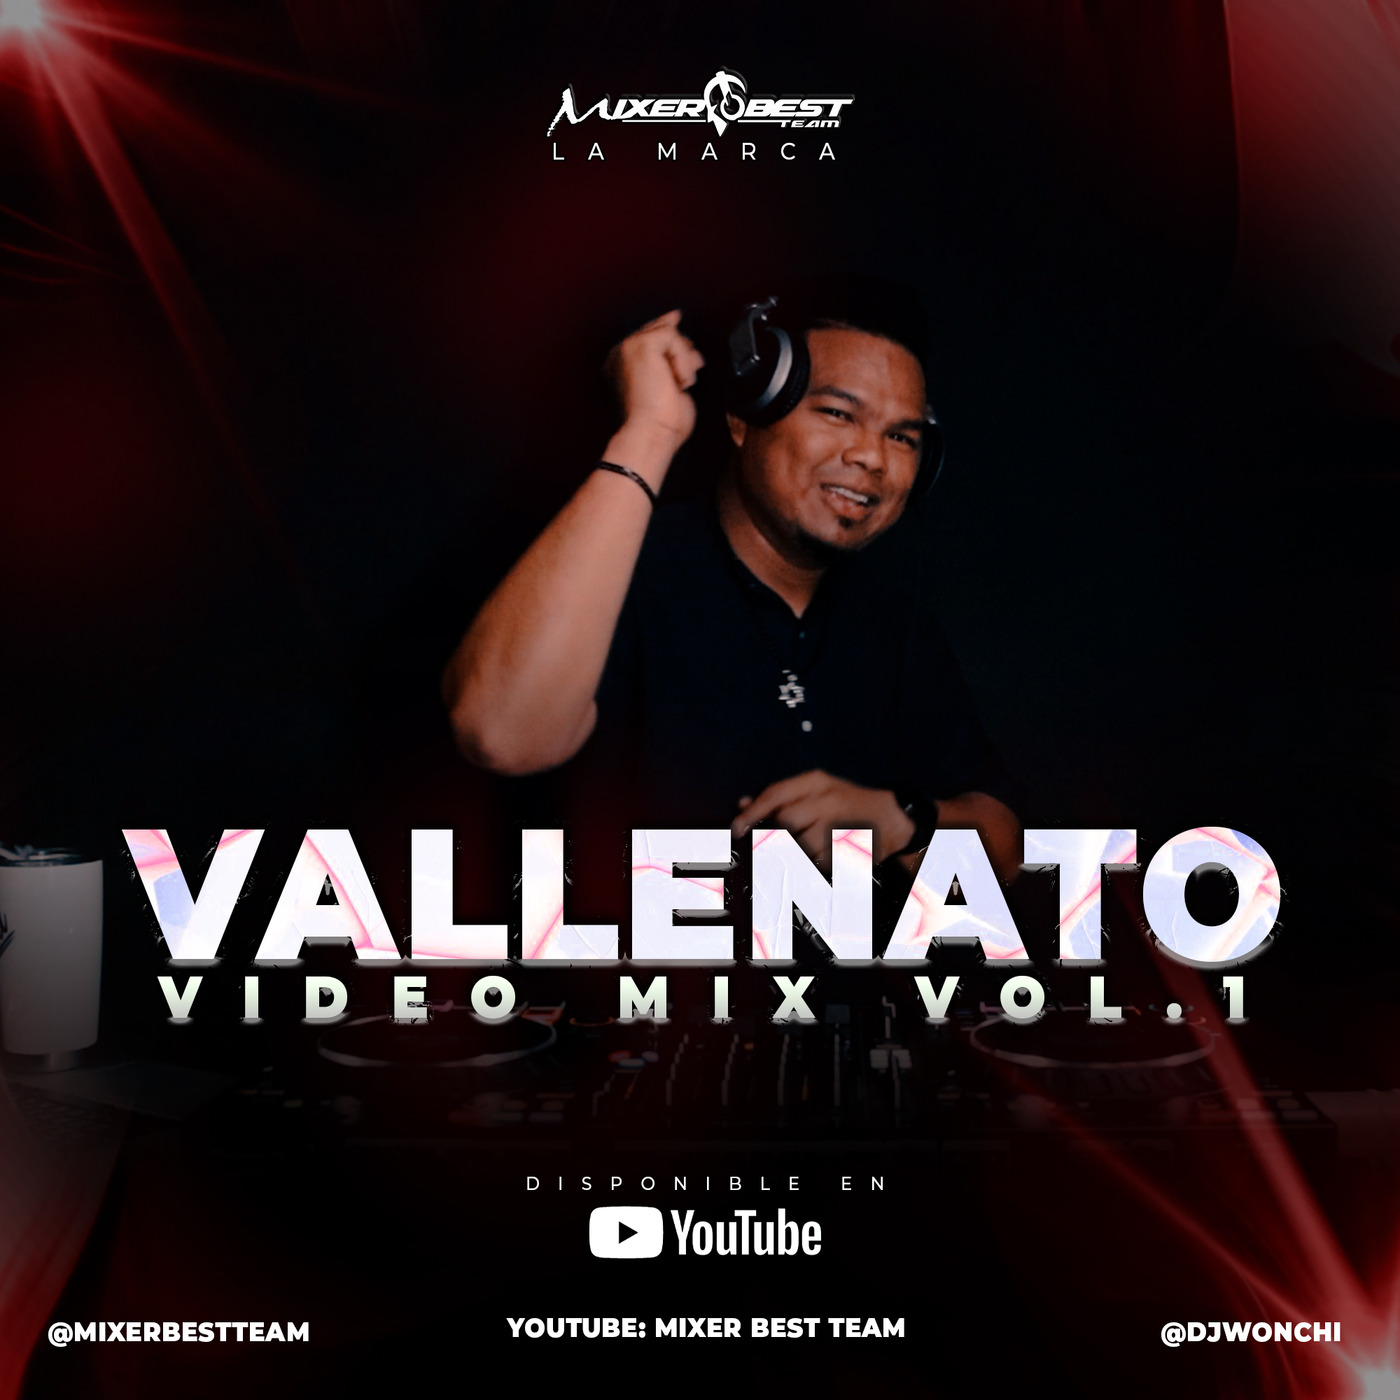 VALLENATO VIDEO MIX VOL.1 - @DJWONCHI X @MIXERBESTTEAM